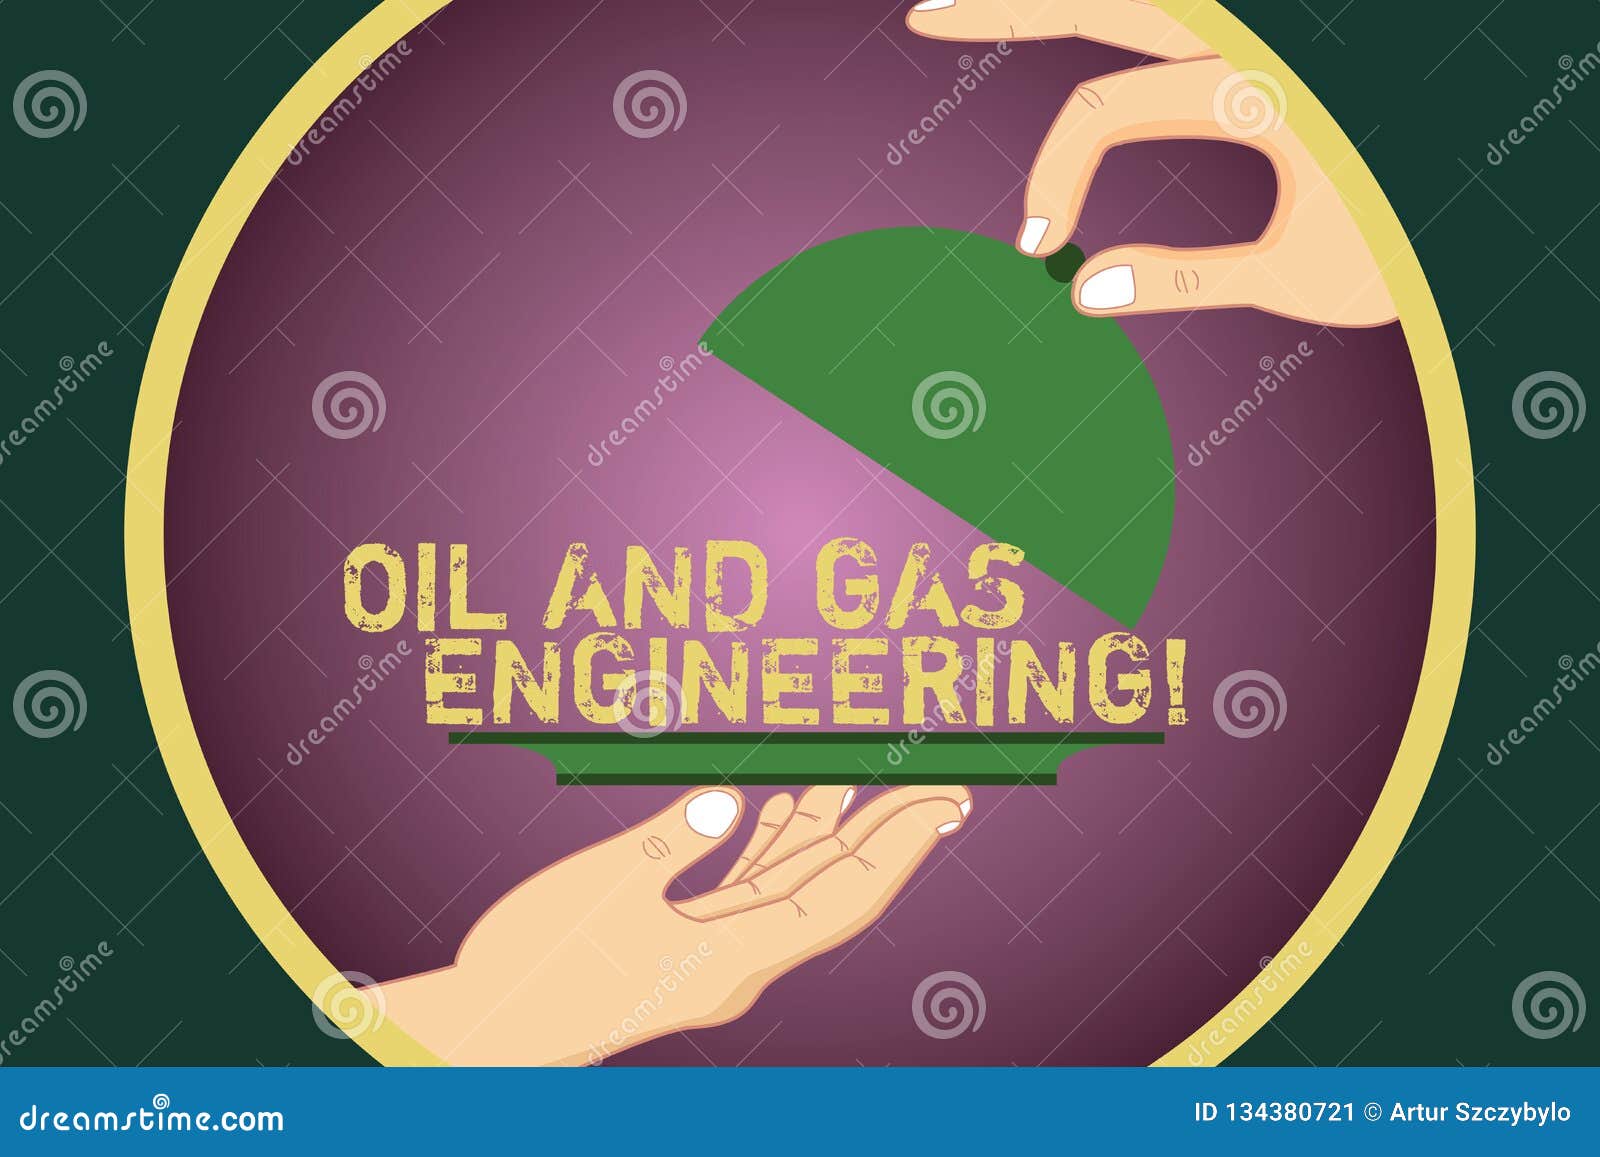 Petroleum engineering admission essay